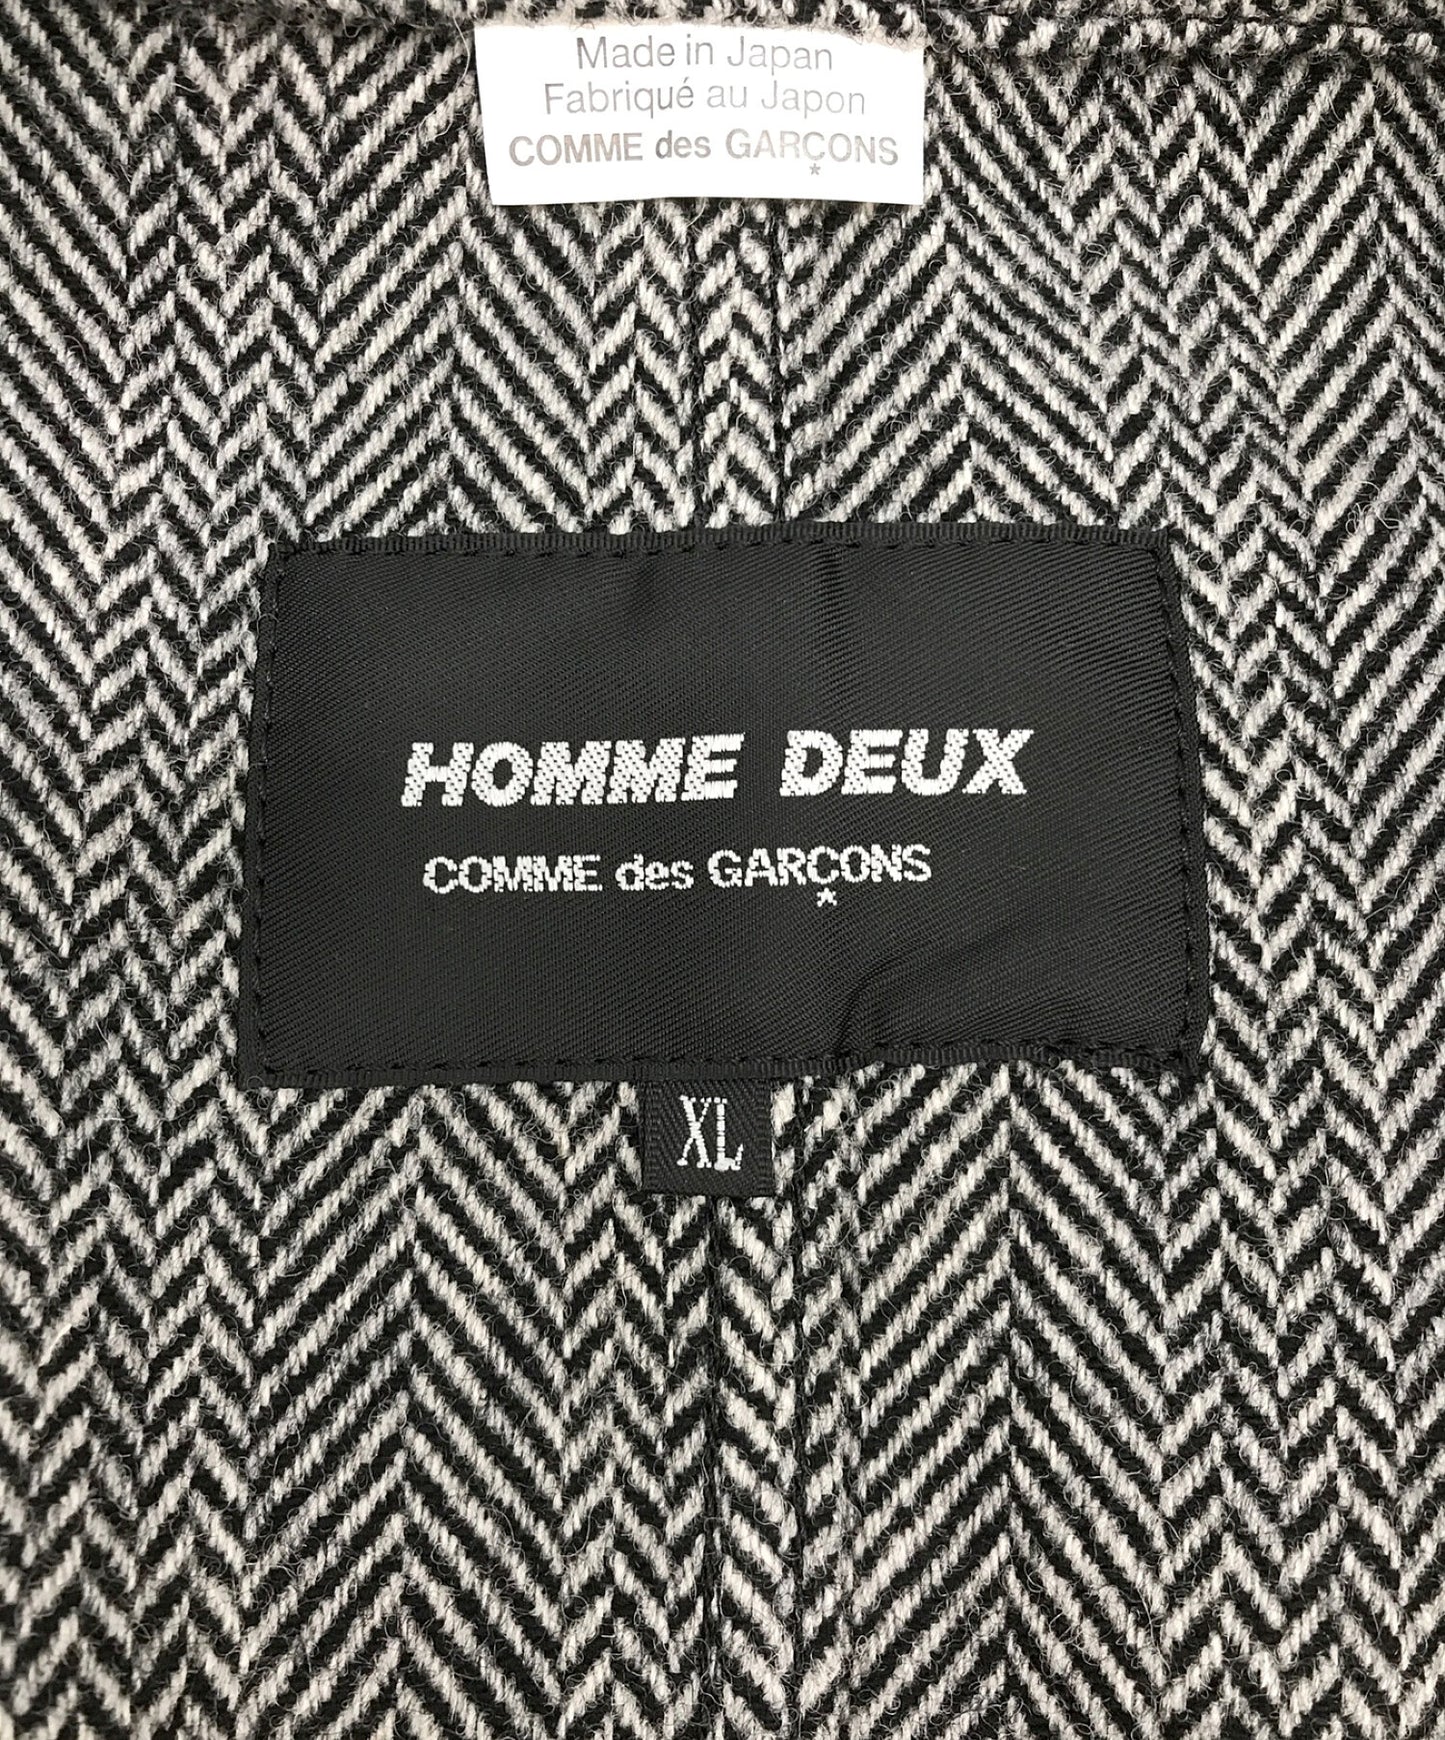 Comme des Garcons Homme Deux 조정 재킷 재킷 DT-J057